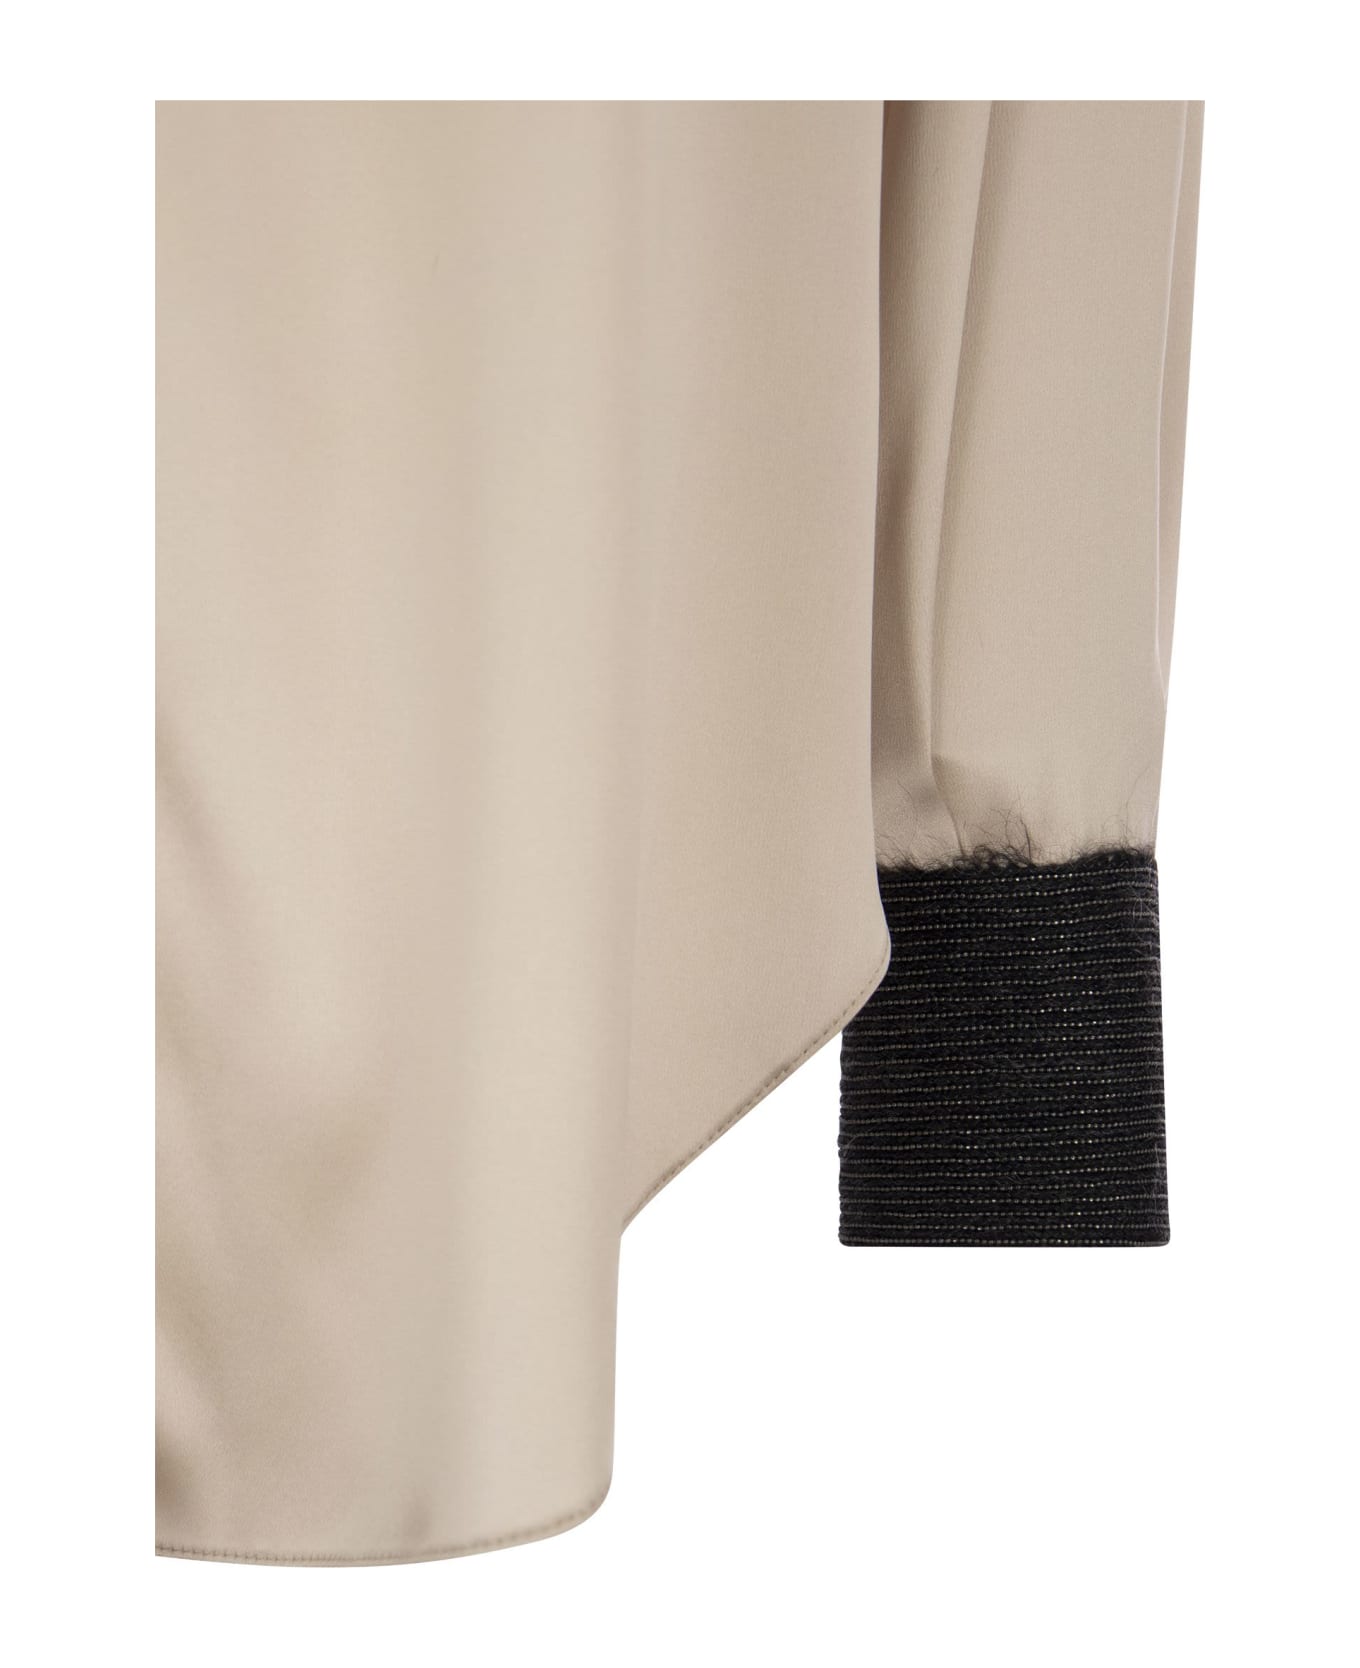 Brunello Cucinelli Stretch Silk Satin Shirt With Precious Contrast Cuffs - Beige シャツ